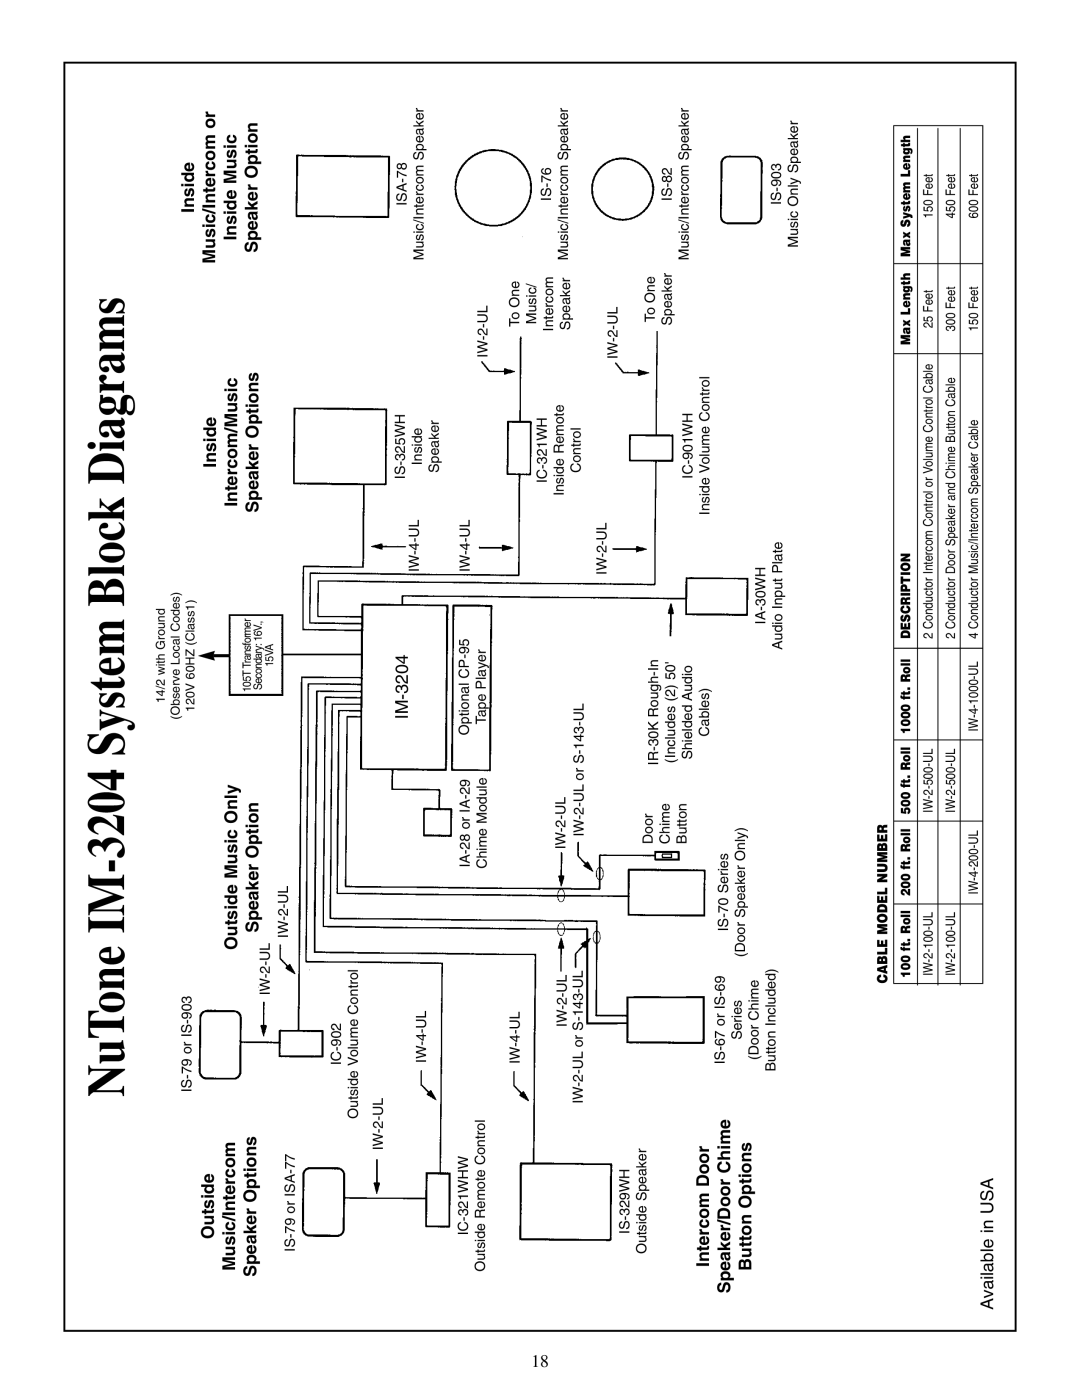 NuTone IM-3204WH, IM-4406, IM-5000, IM-3303, IMA-516, IK-15, IK-25 manual NuTone IM-3204 System Block Diagrams, Available in USA 